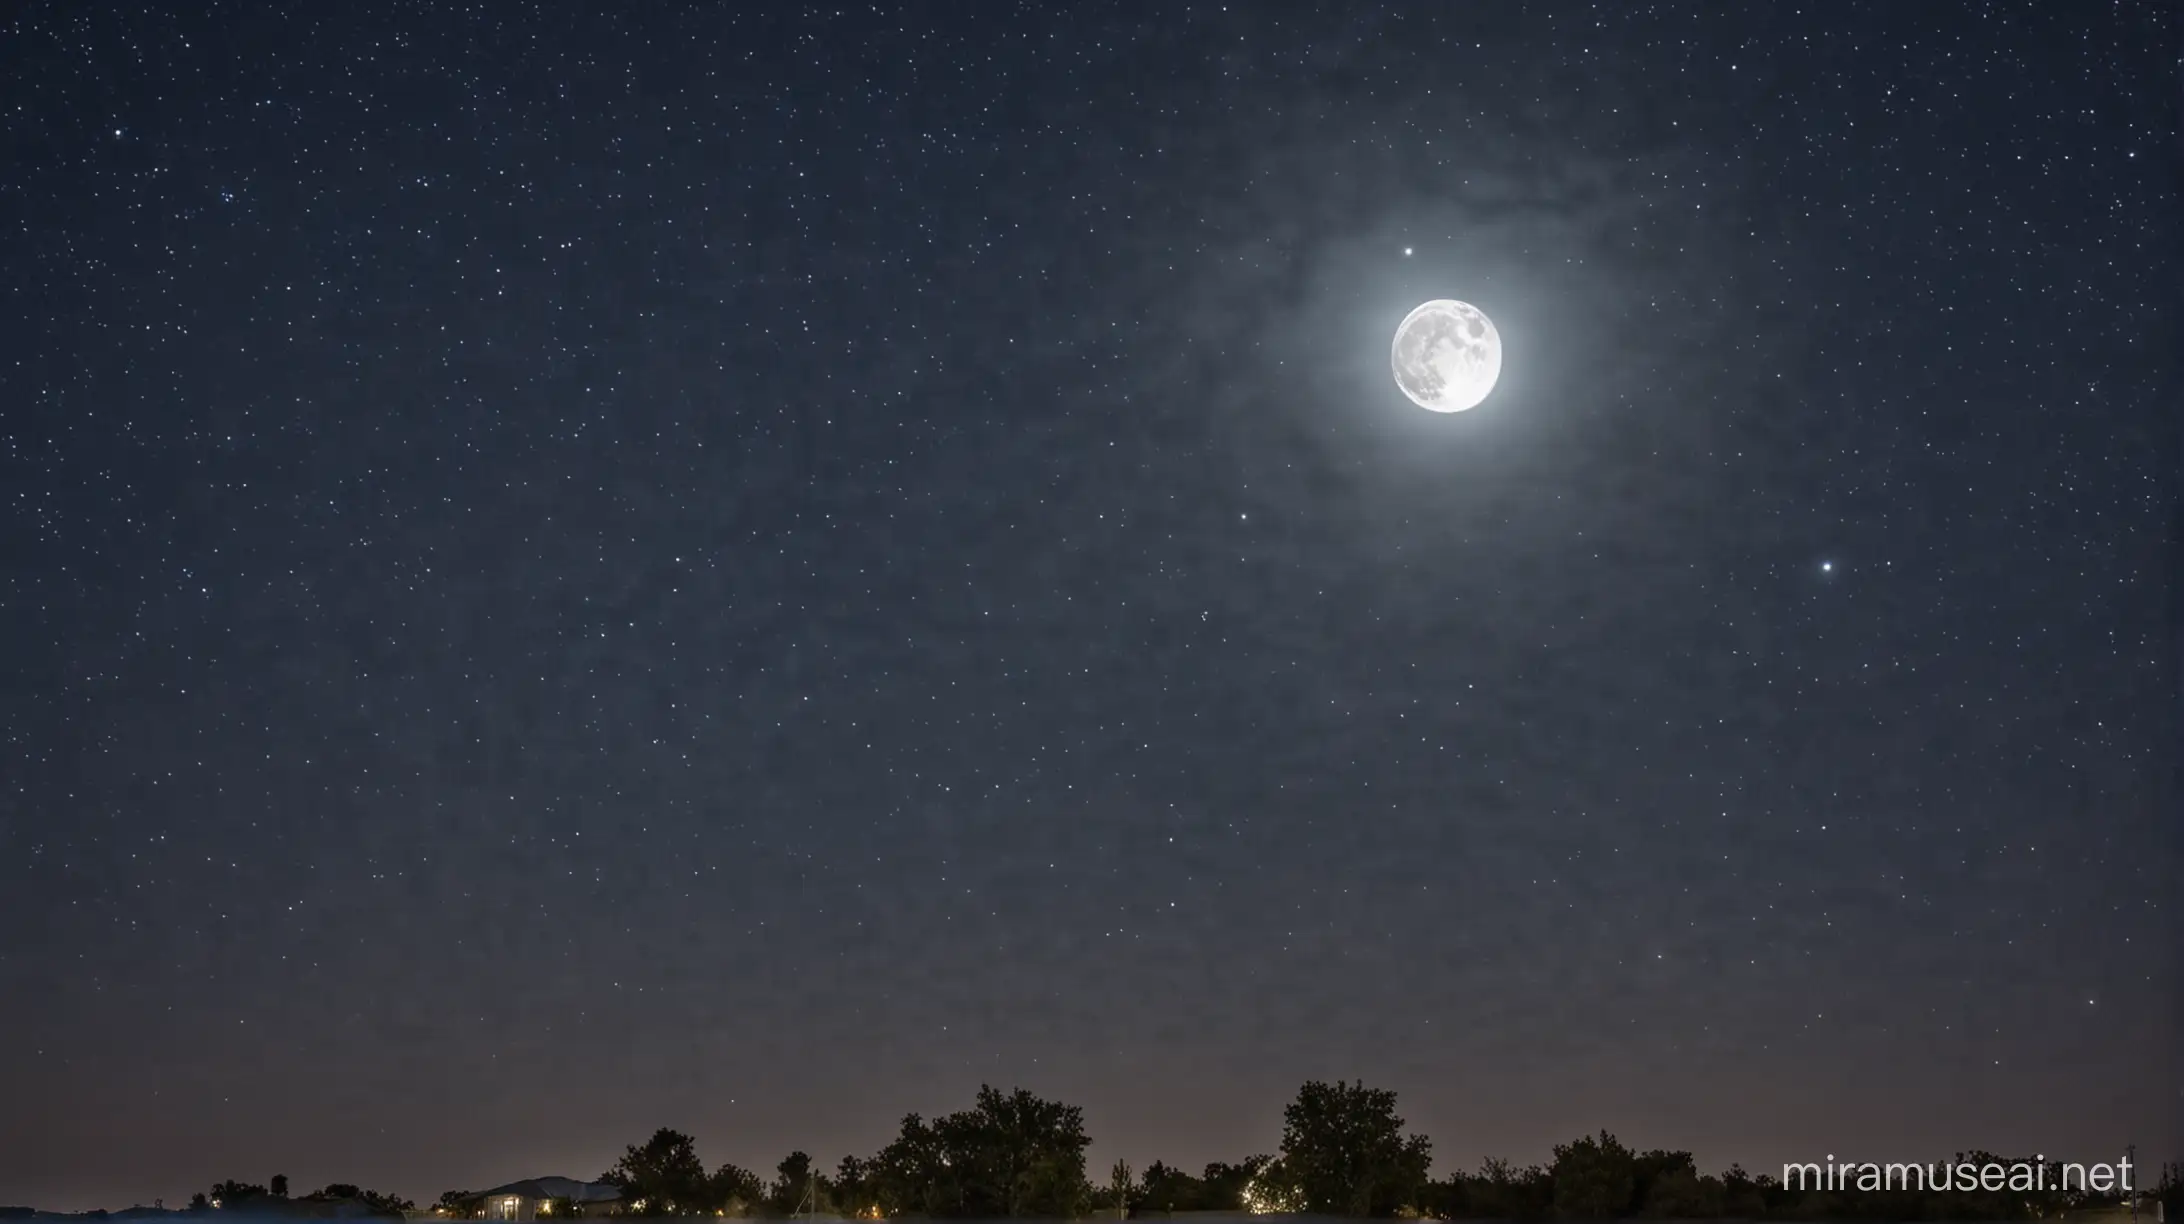 Starry Night with Full Moon Illuminating the Sky